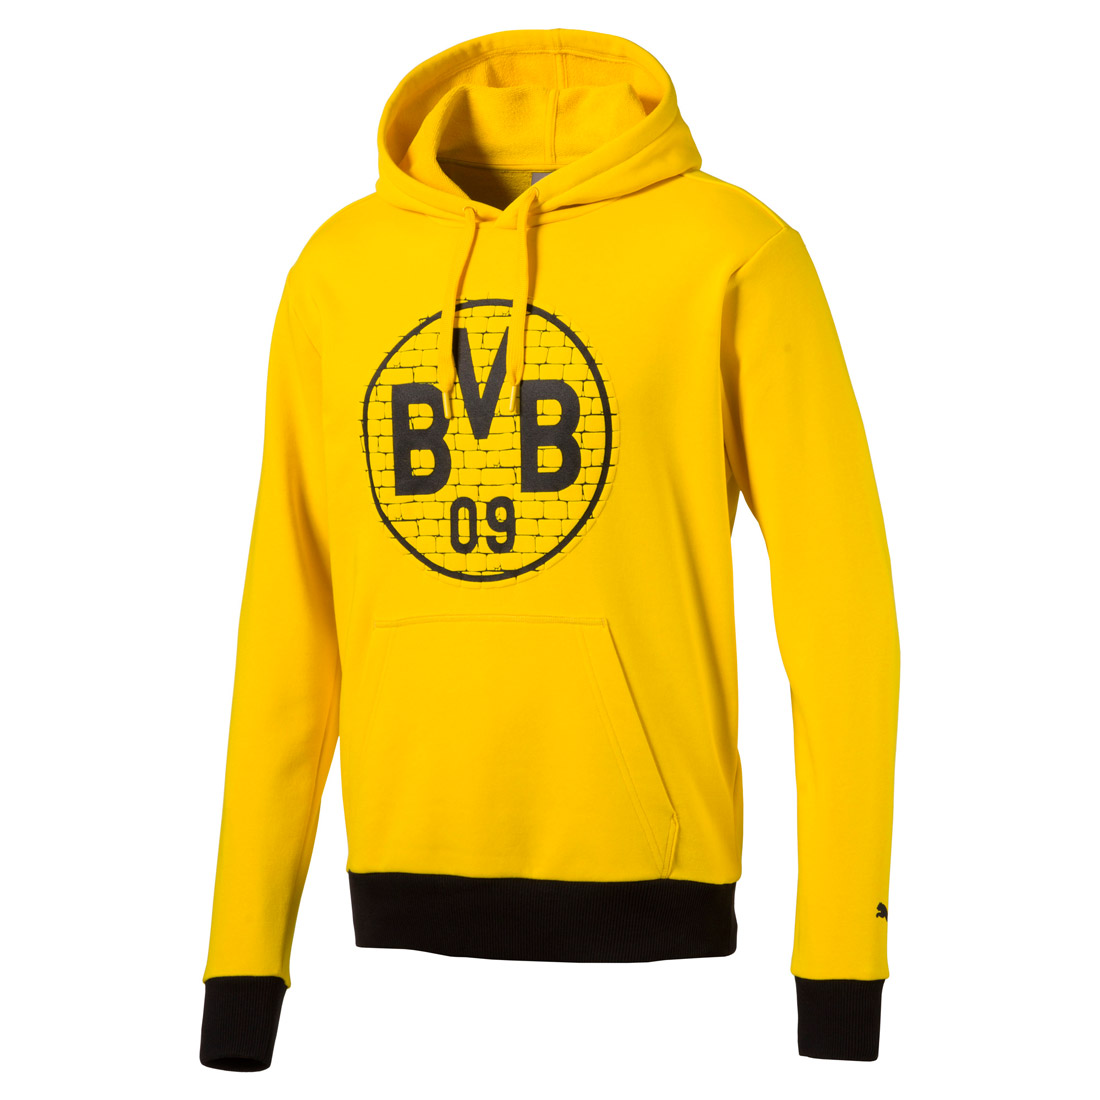 Puma BVB Fan Hoody Borussia Dortmund 09 Herren Sweatshirt 752863 11